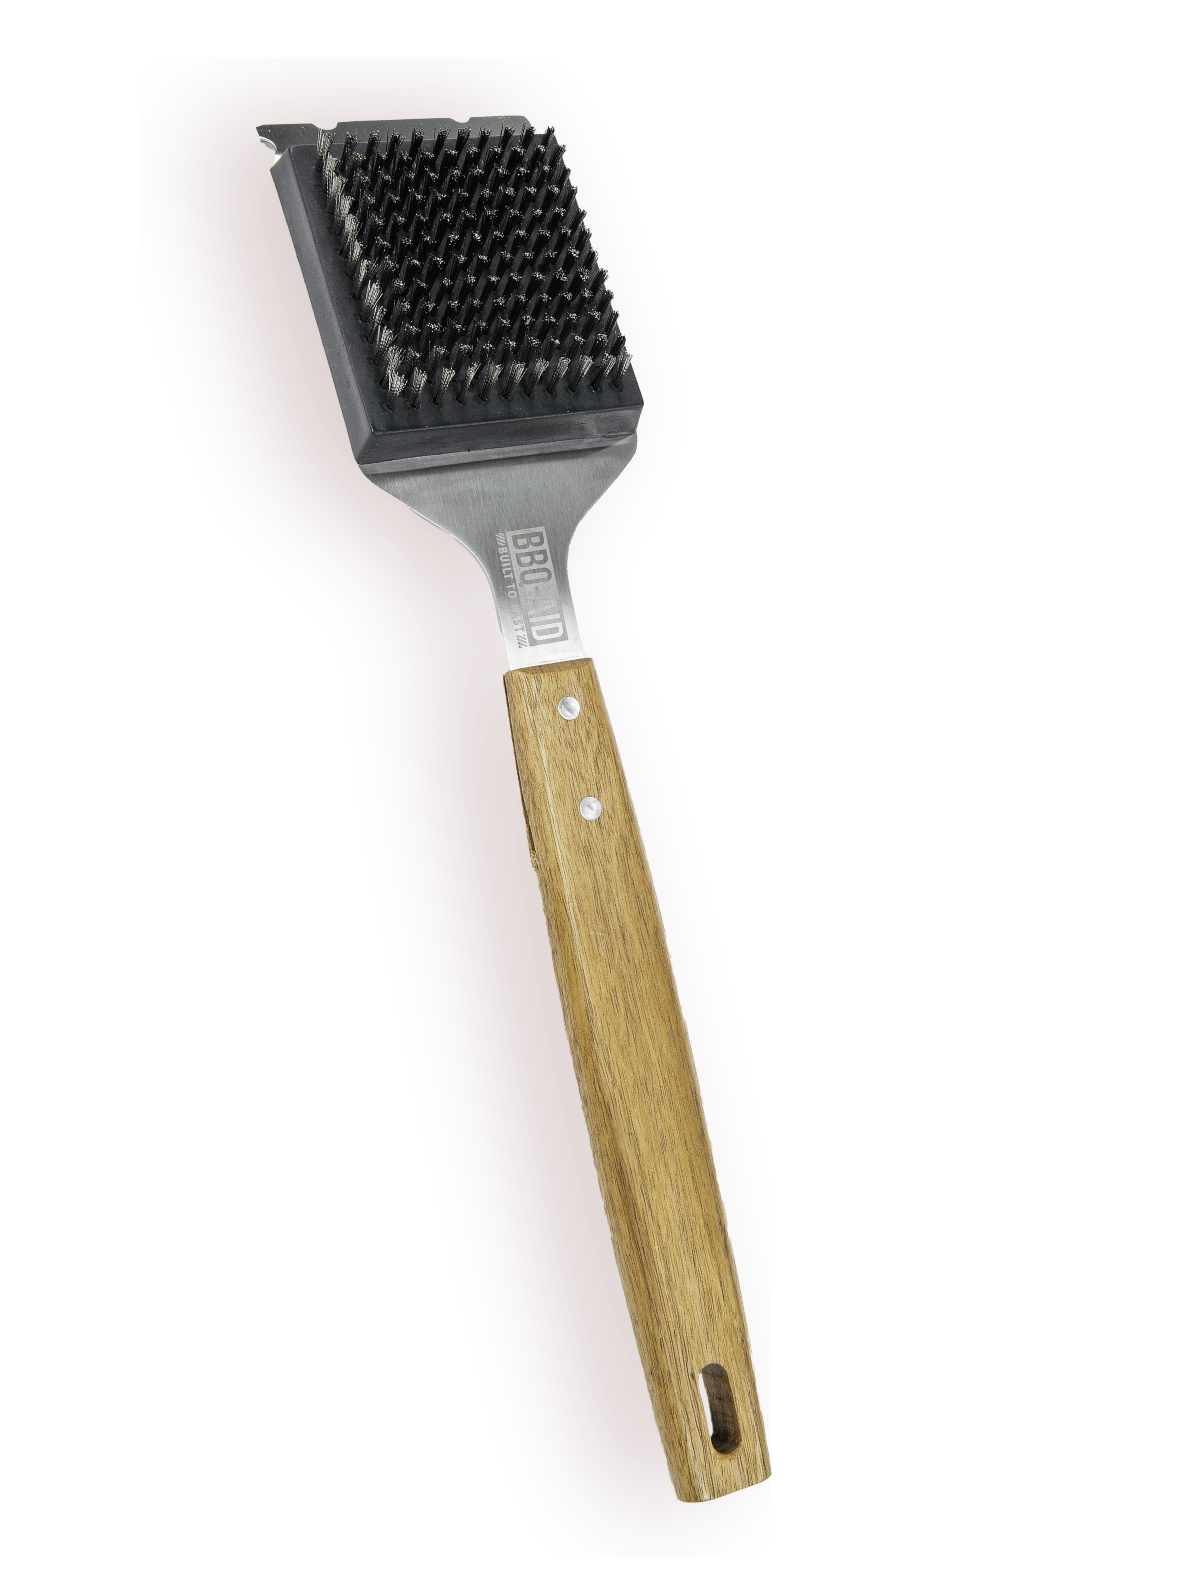 BBQ-AID Grill Brush and Scraper